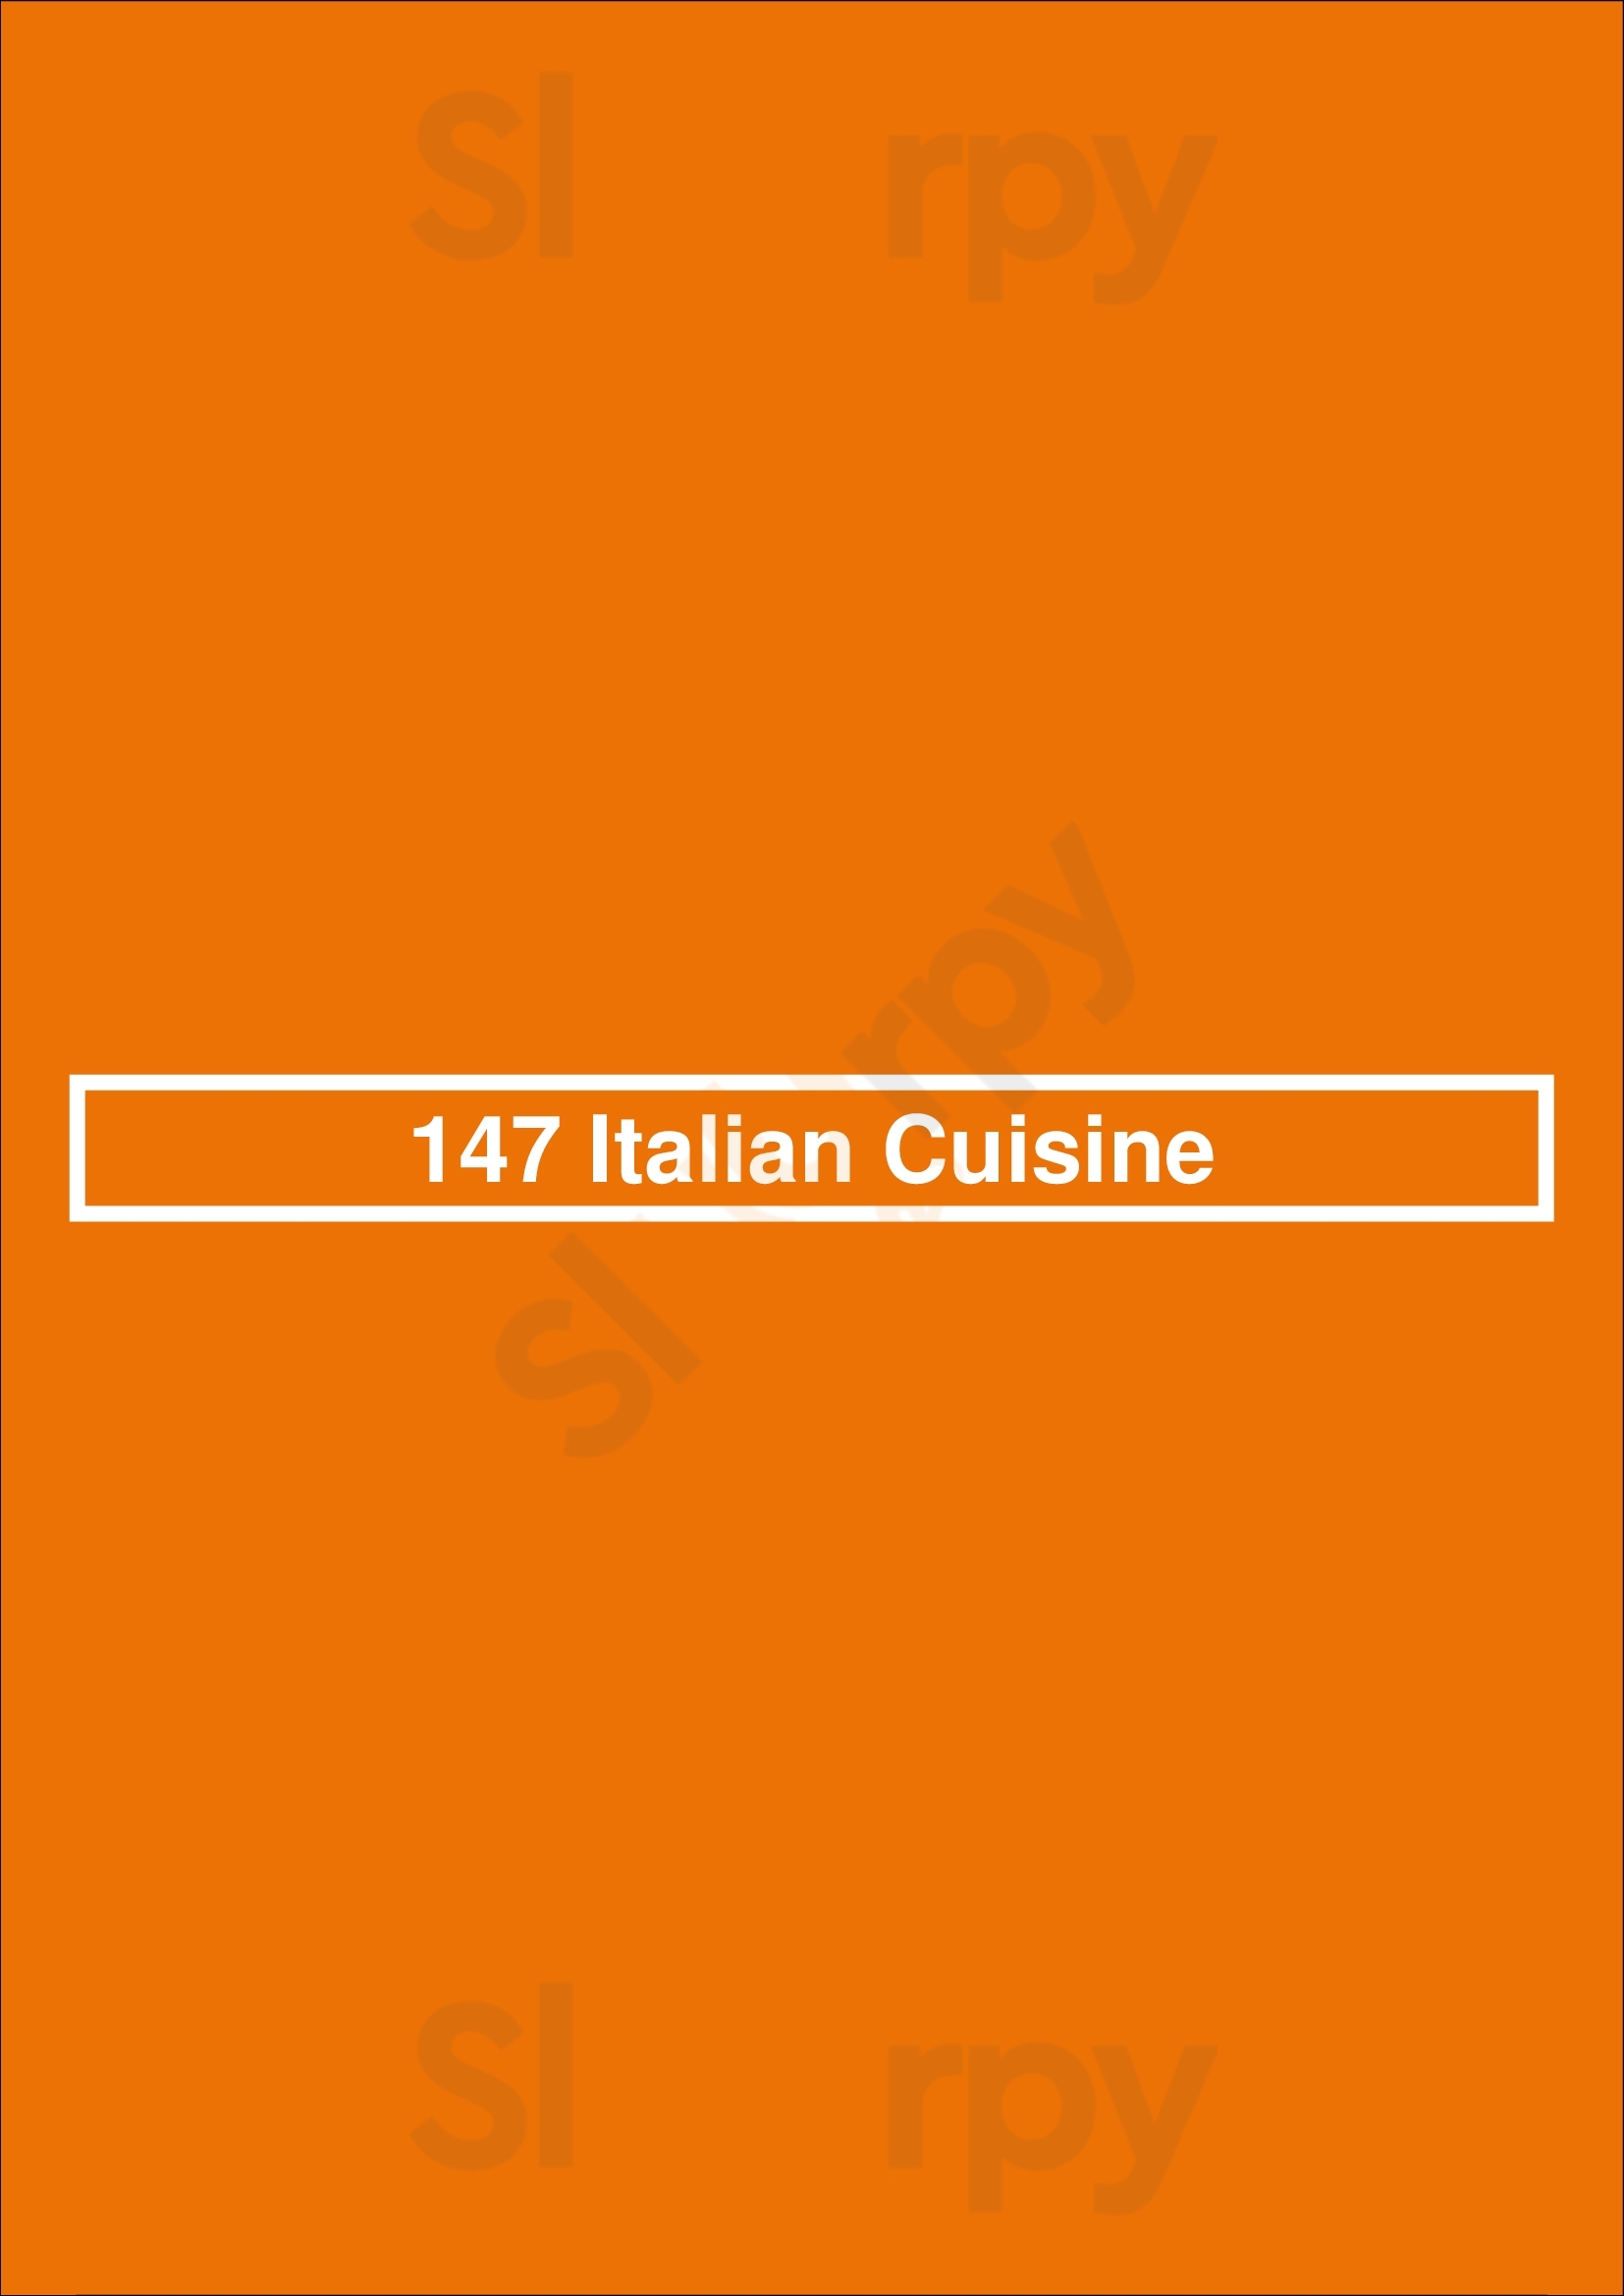 147 Italian Cuisine Barrie Menu - 1